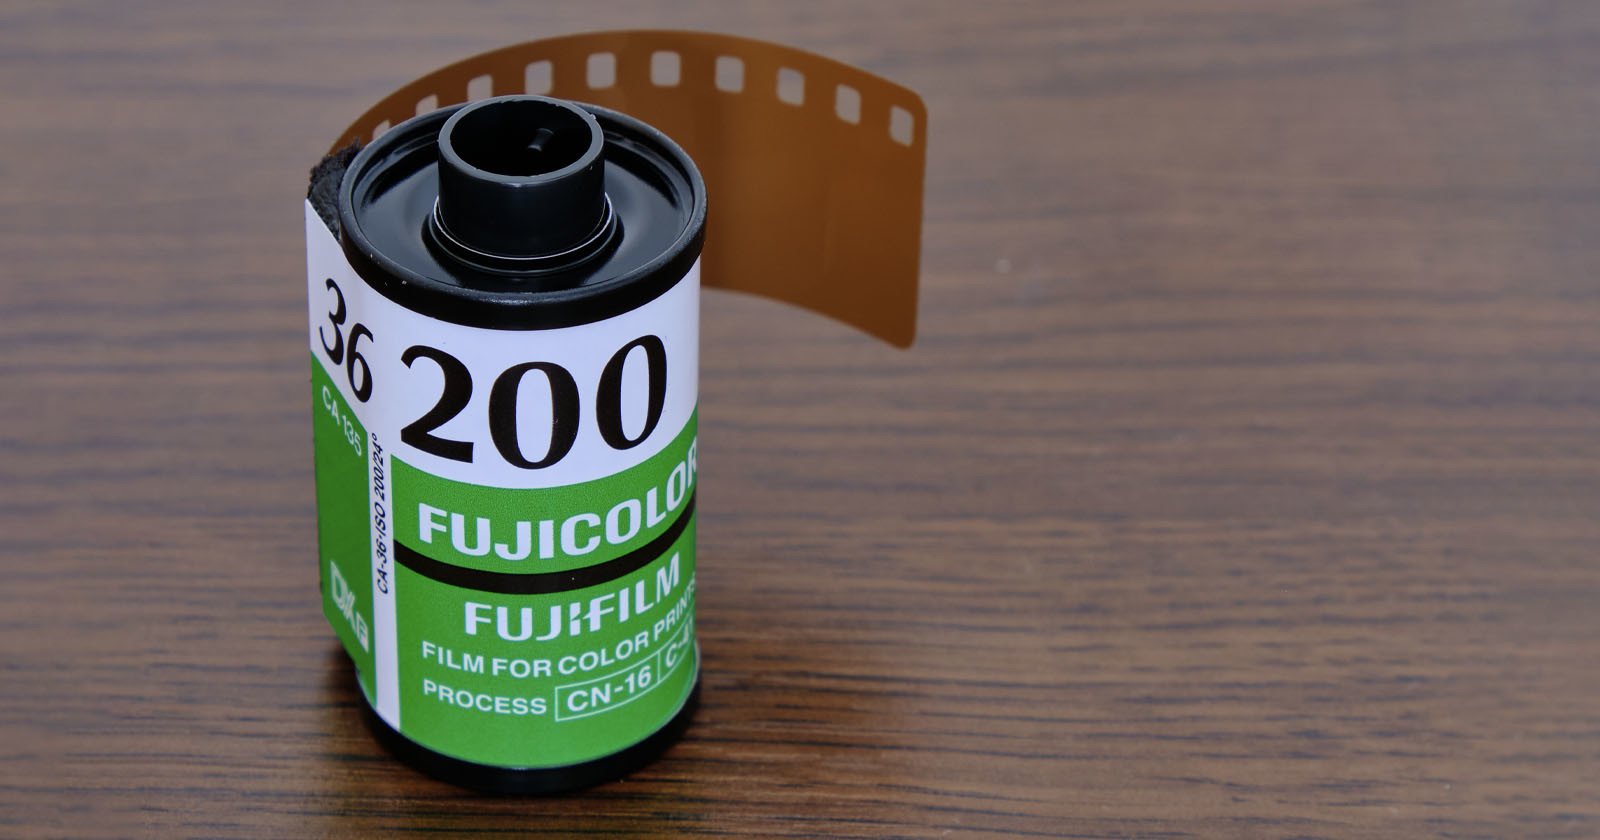  fujifilm hike film prices april 2022 report 